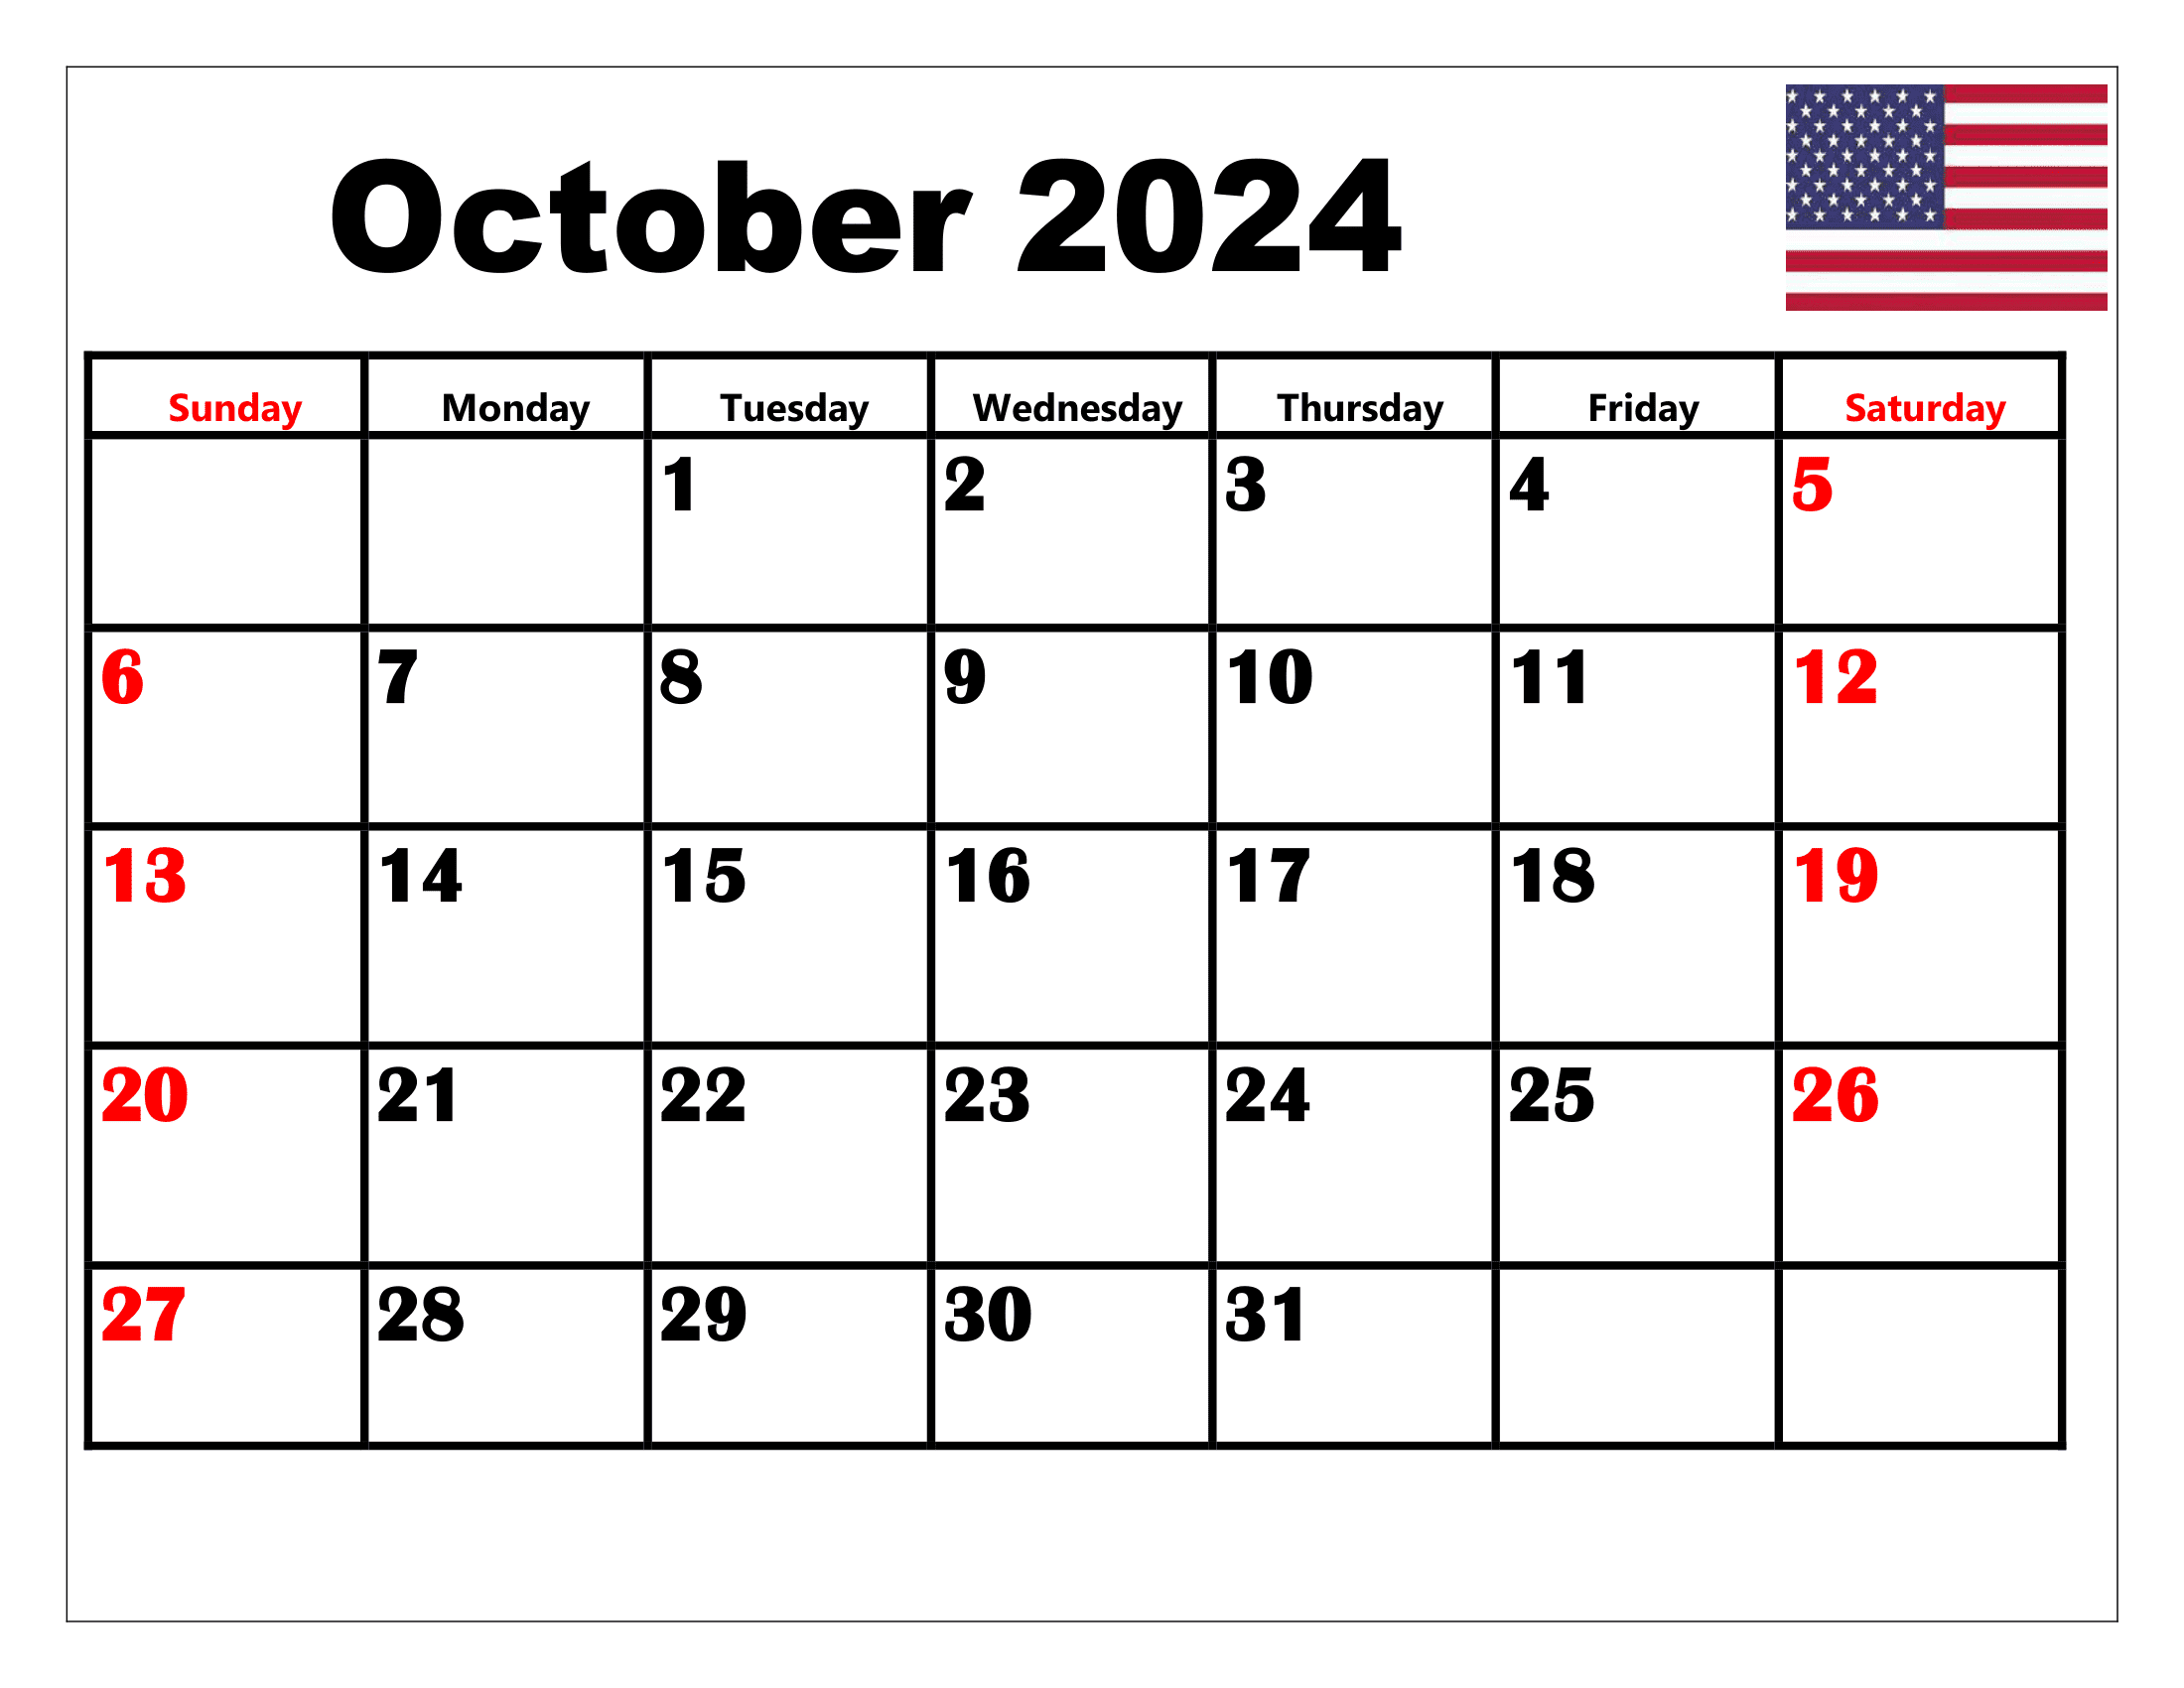 October 2024 Calendar Printable Pdf Free Templates With Holidays for Printable October 2024 Calendar With Holidays